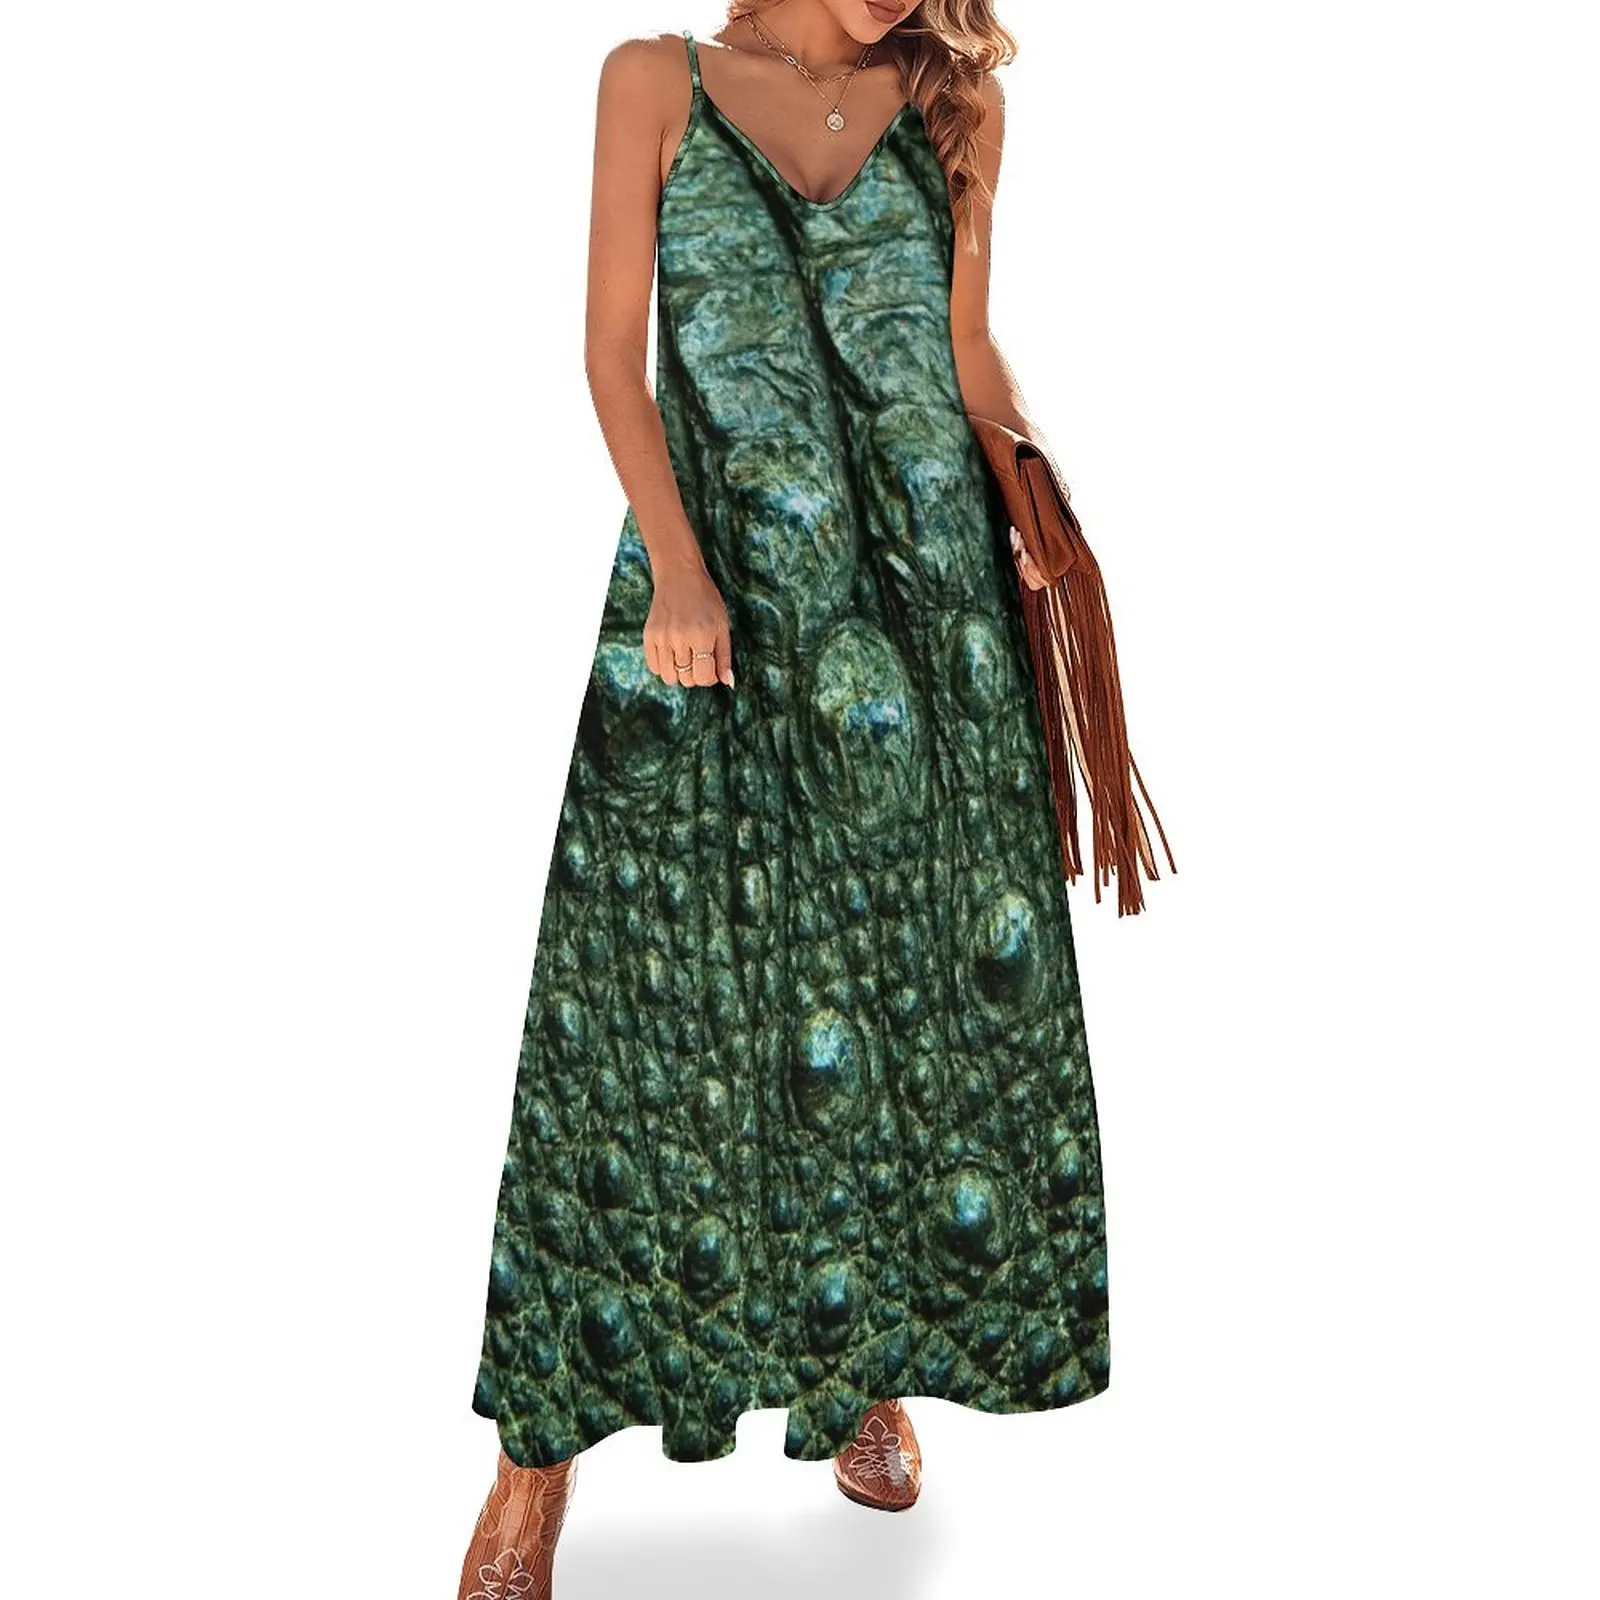 

New Green Alligator Skin Sleeveless Dress fairy dress women formal occasion dresses